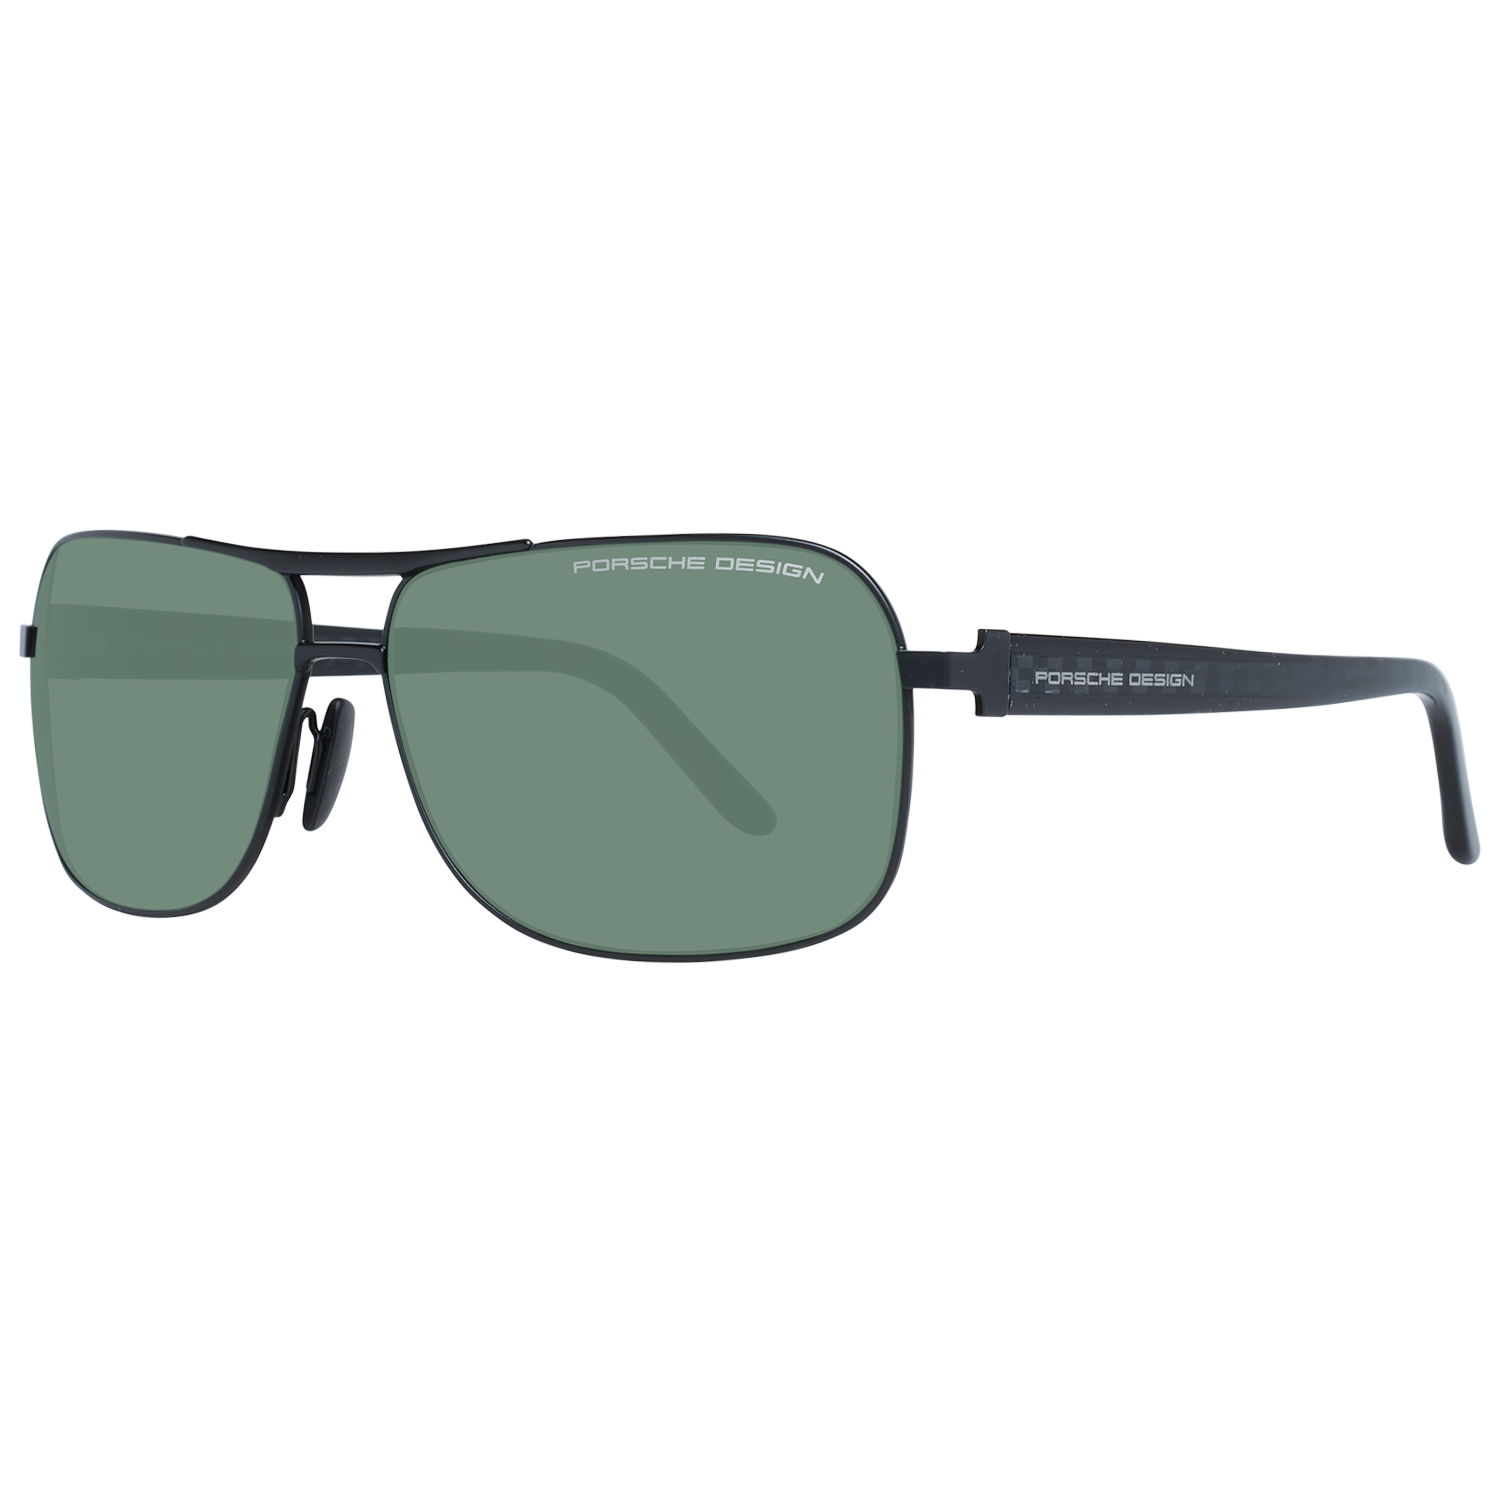 Porsche Design Sunglasses Mens Black Pilot Rectangle w/ Green Lens ...